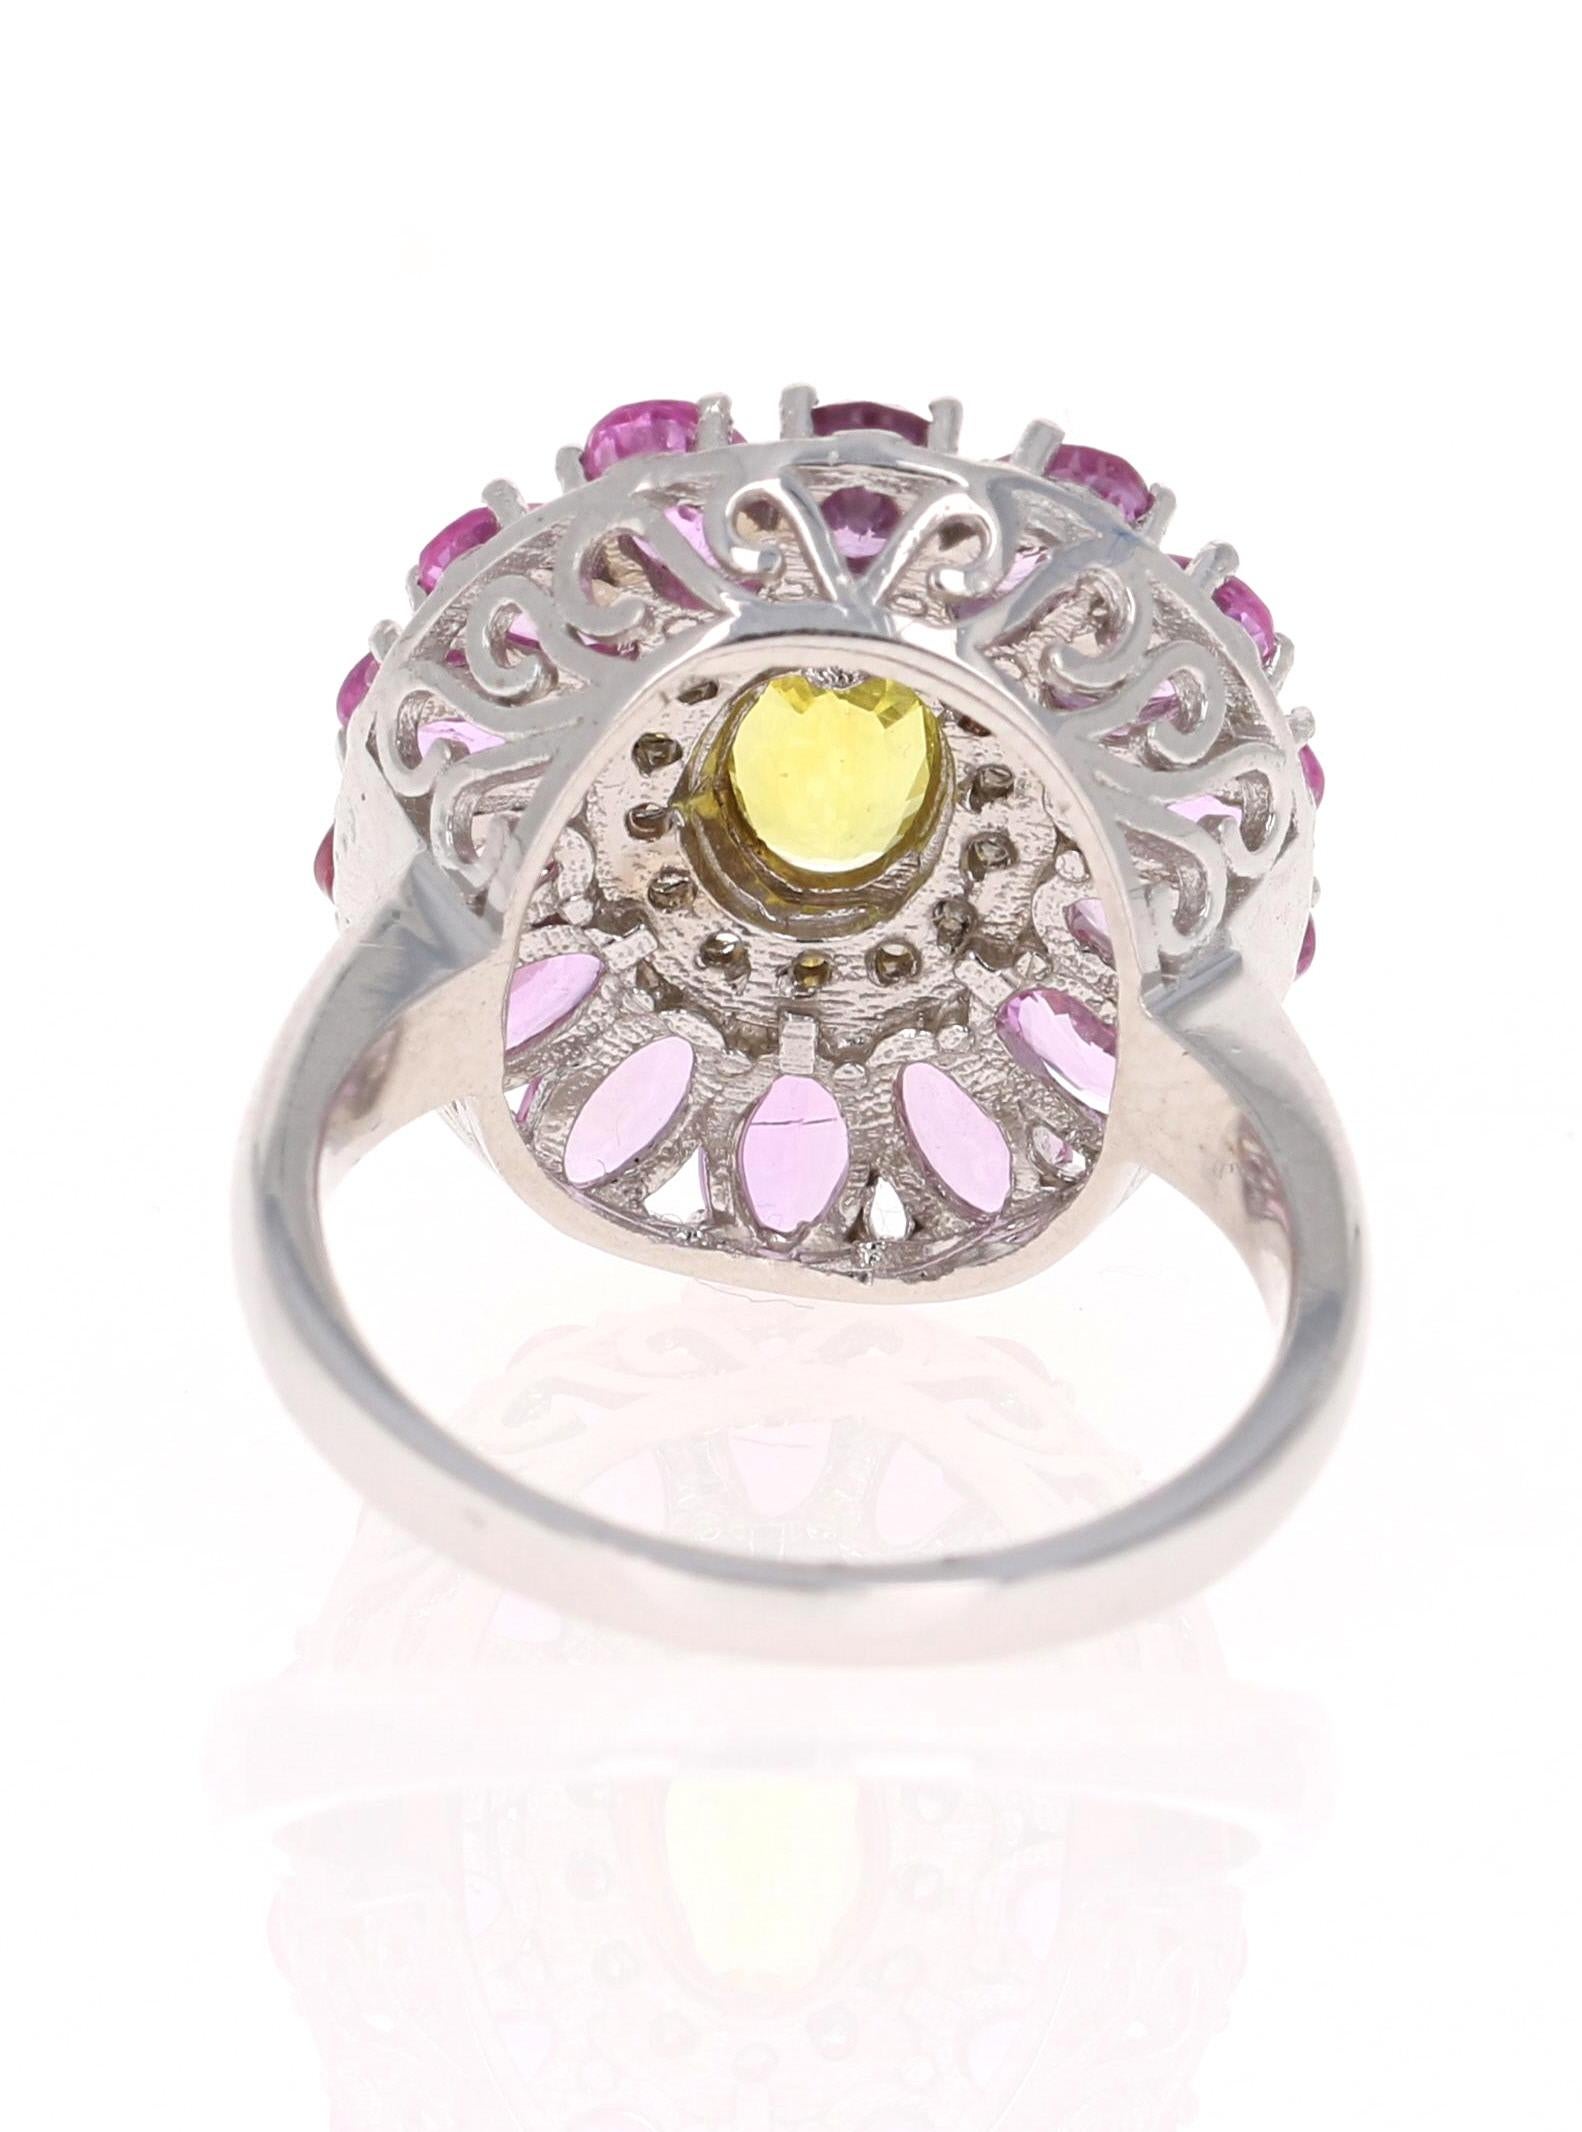 Oval Cut 5.24 Carat Pink Yellow Sapphire Diamond 14 Karat White Gold Cocktail Ring